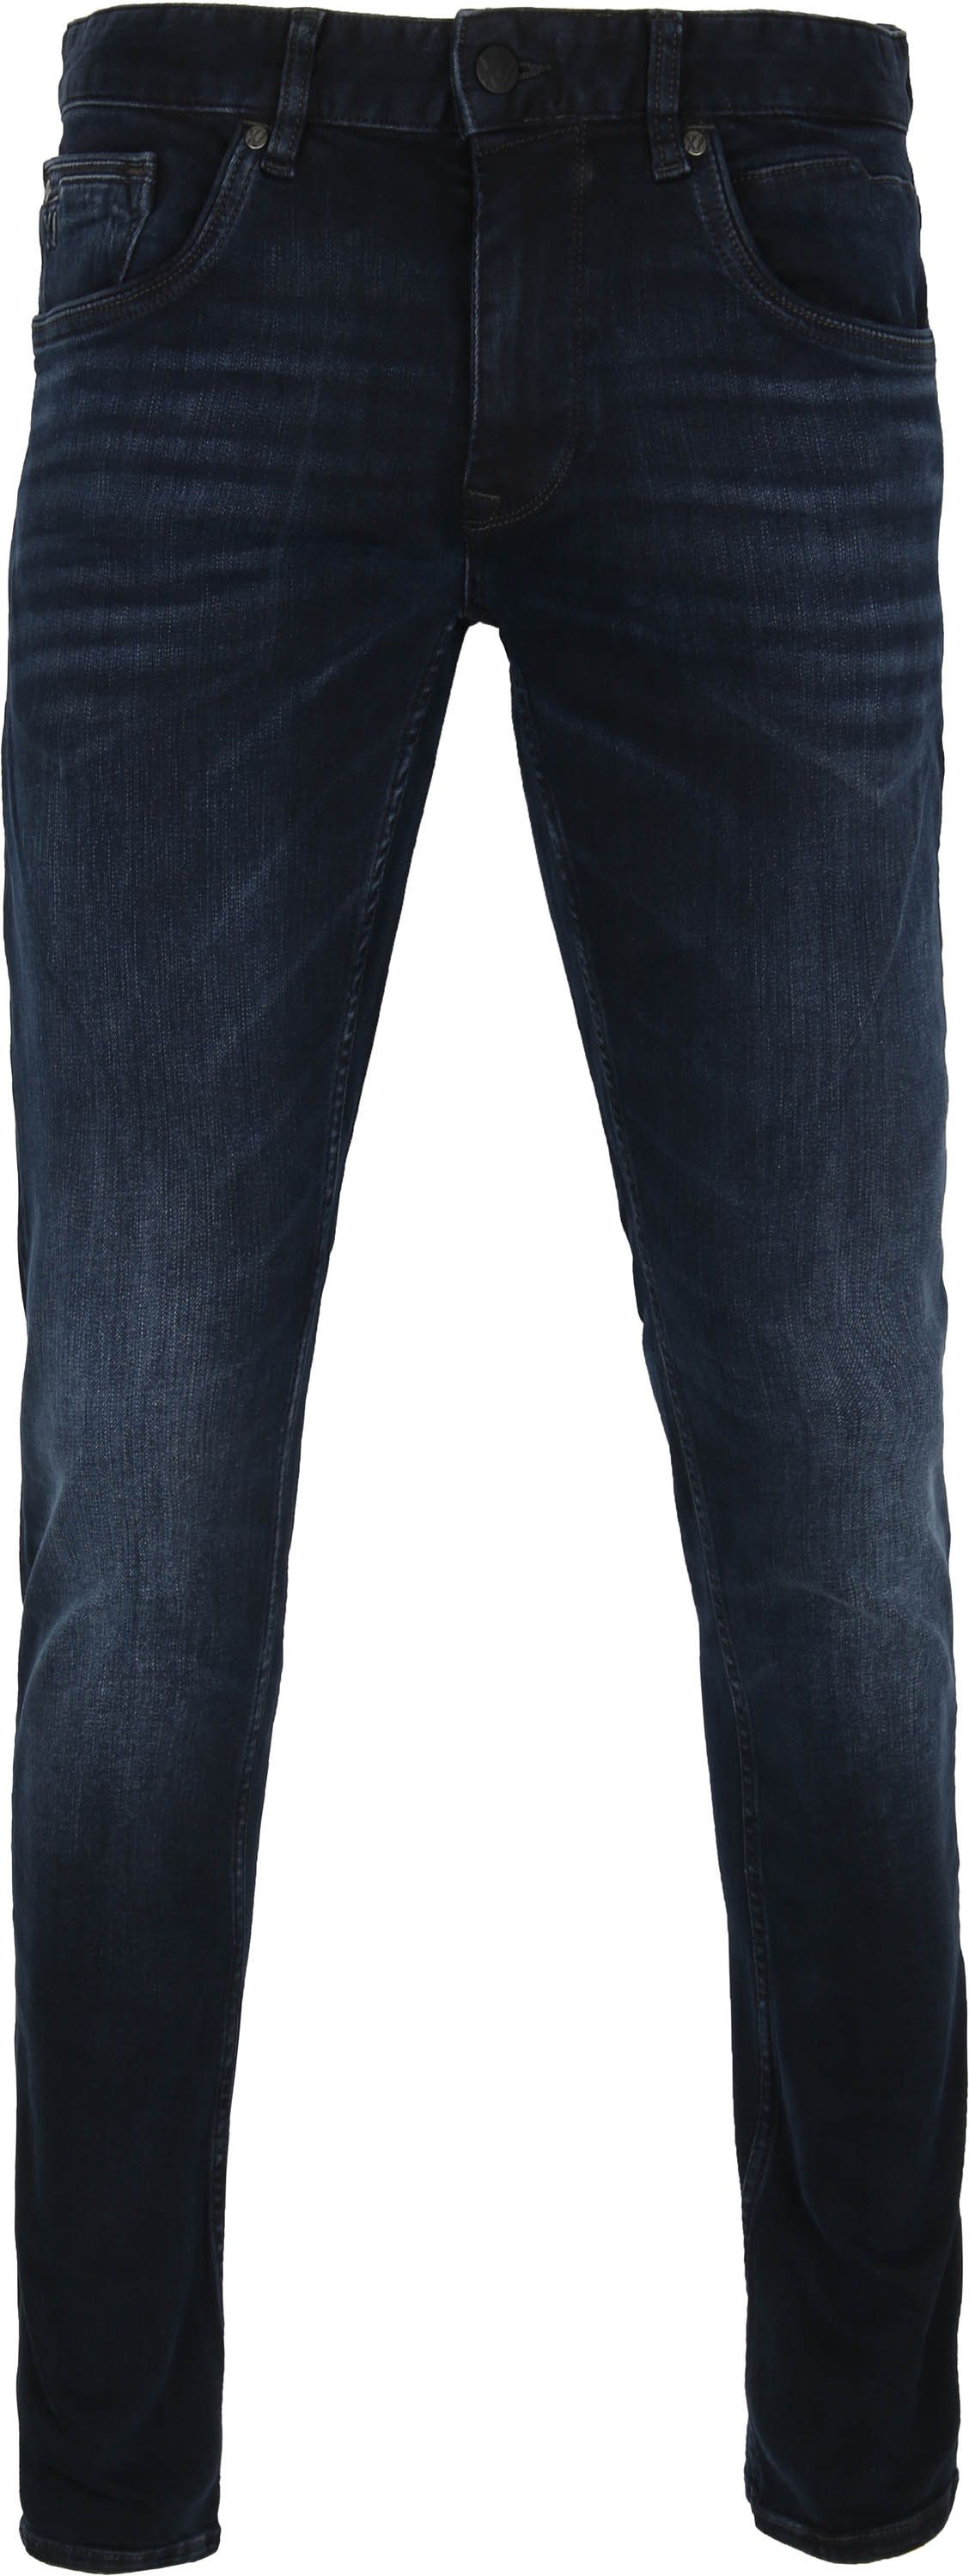 PME Legend XV Jeans Black PTR150 Dark Blue Blue size W 29